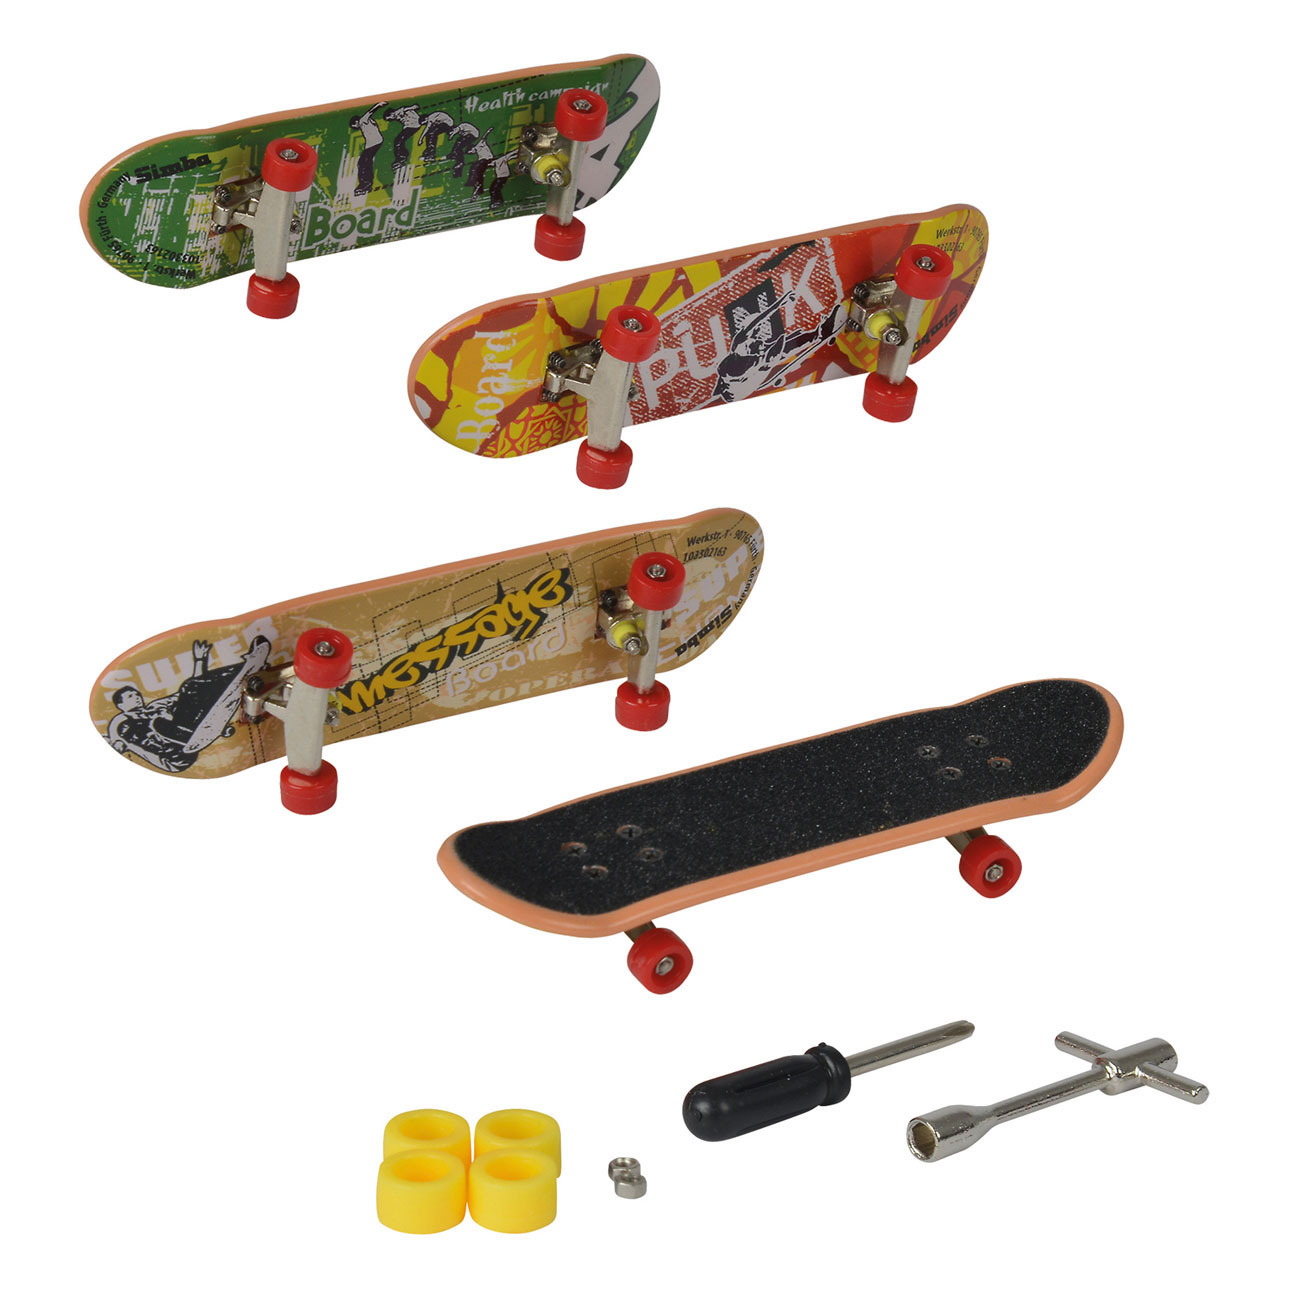 ondernemen De vreemdeling veiligheid Vinger Skateboard X-Treme Set online kopen? | Lobbes Speelgoed